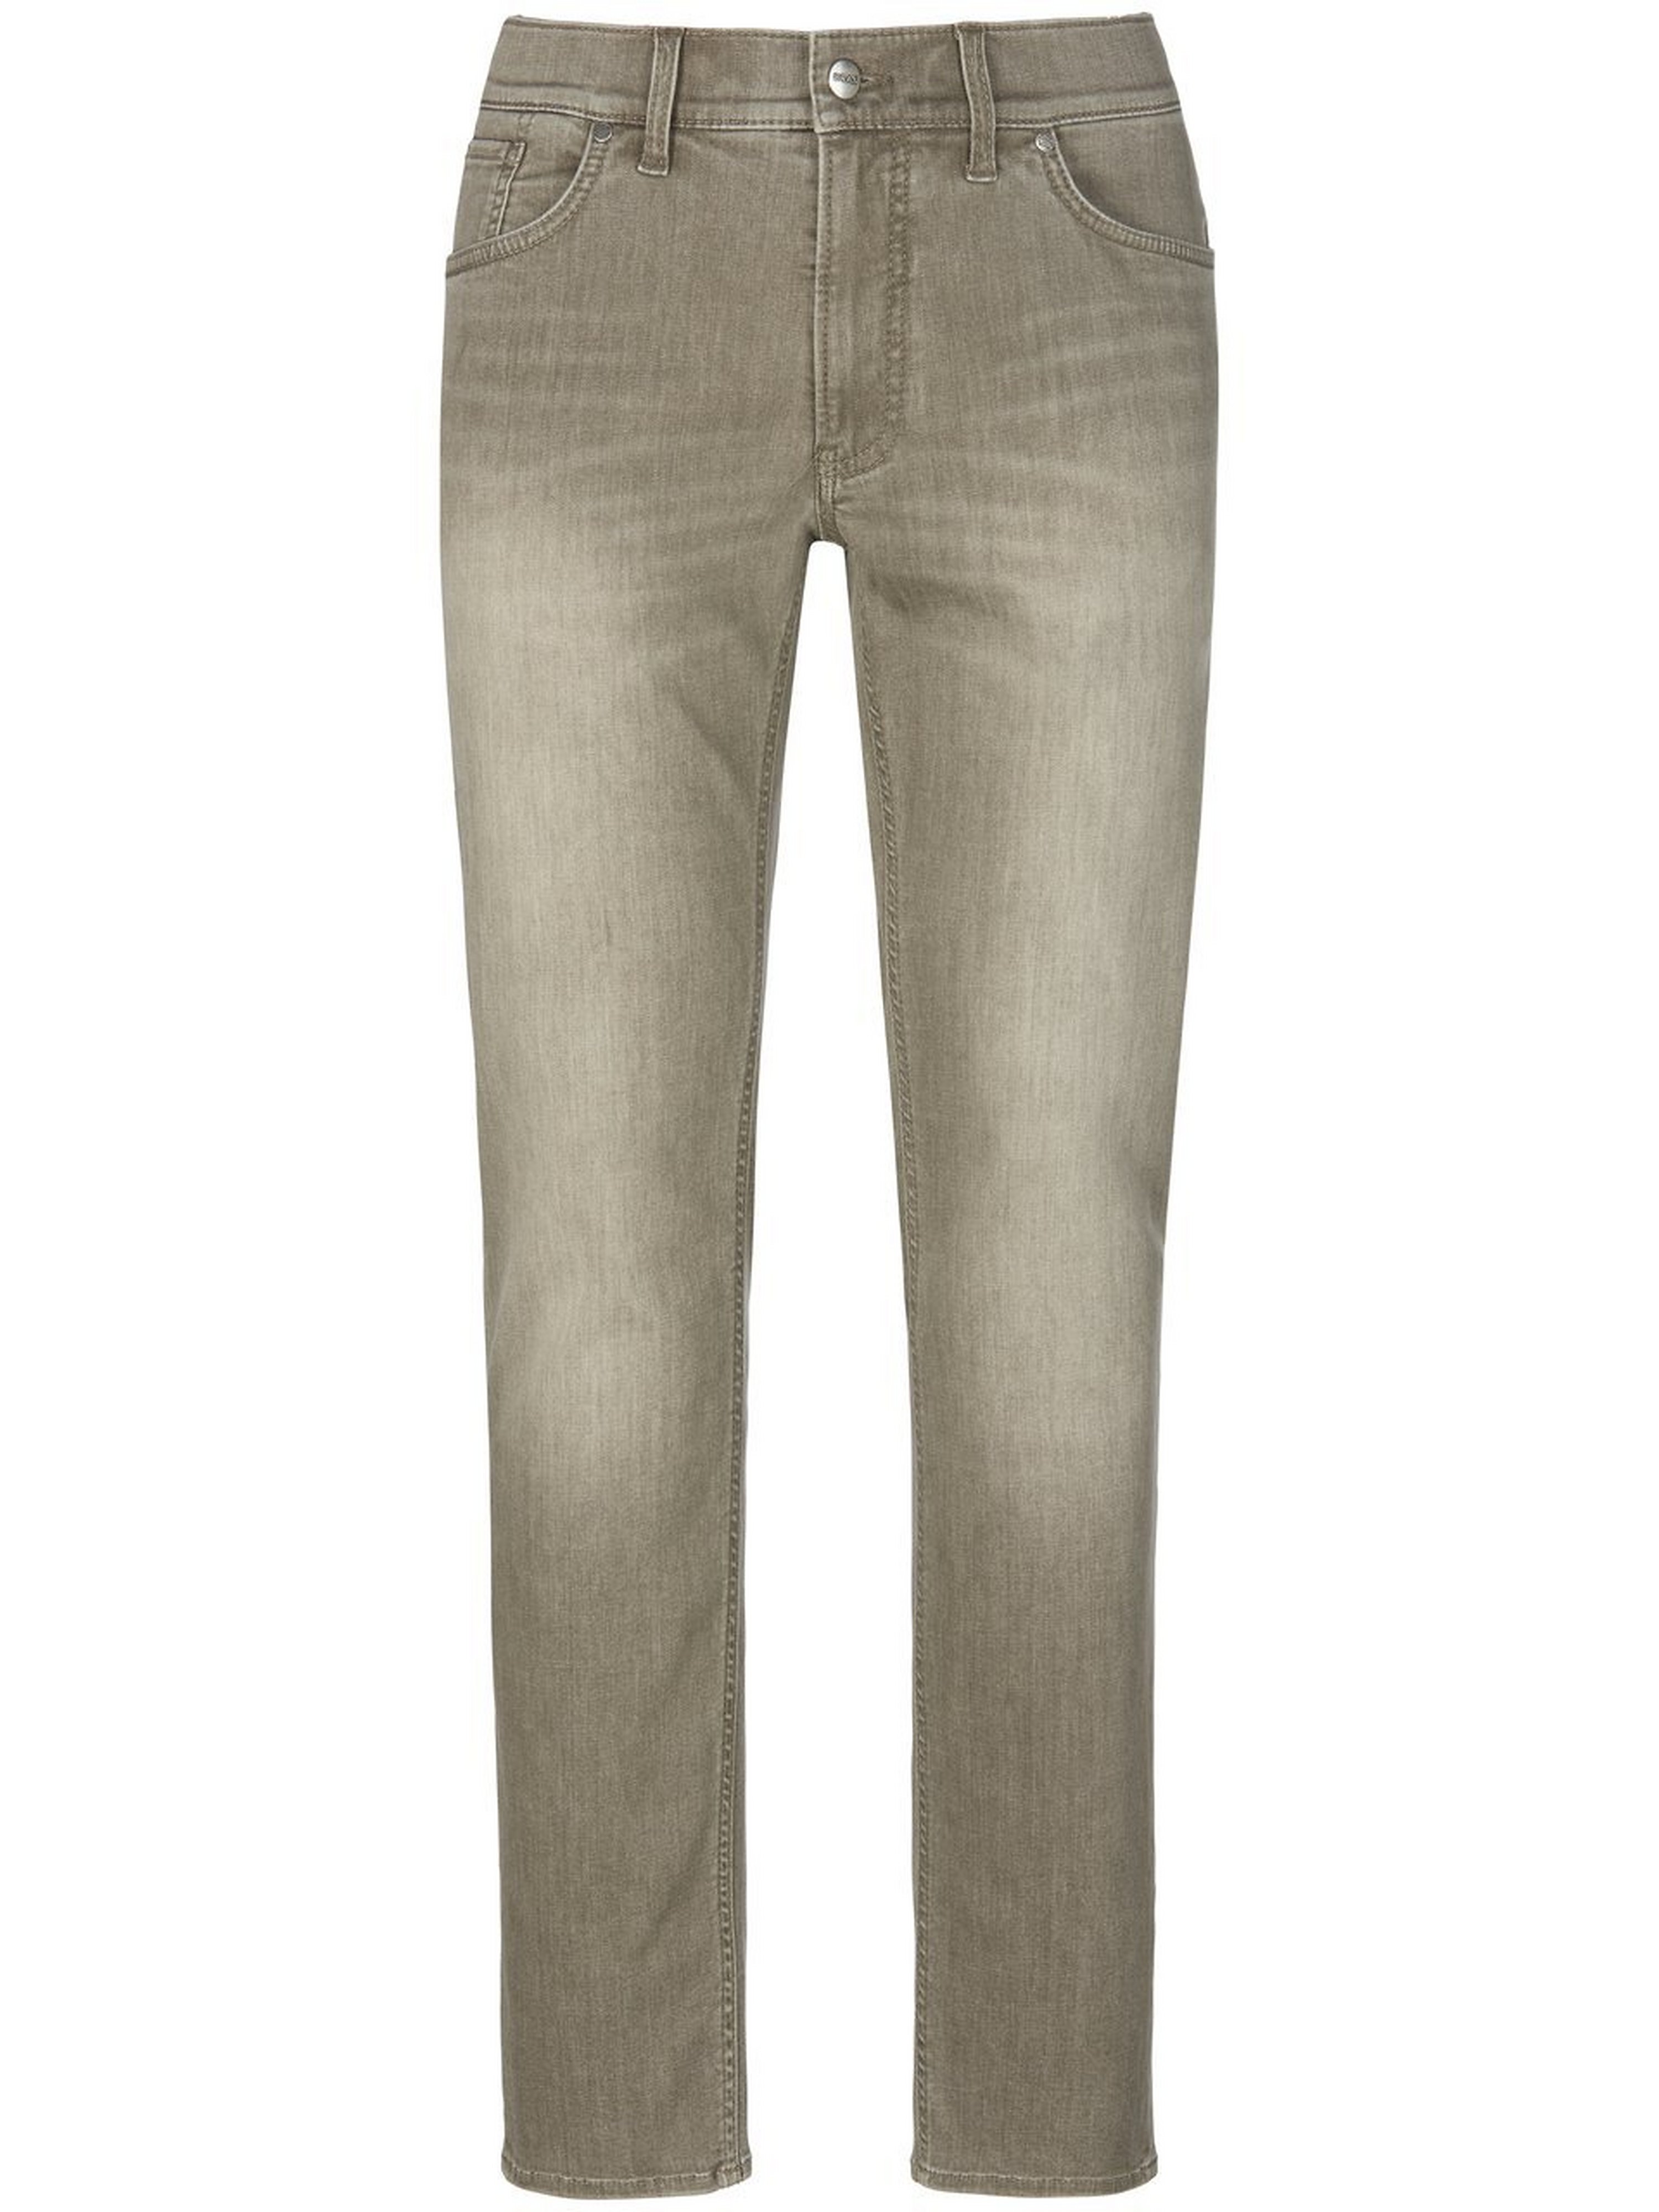 'Modern Fit'-jeans model Chuck Van Brax Feel Good groen